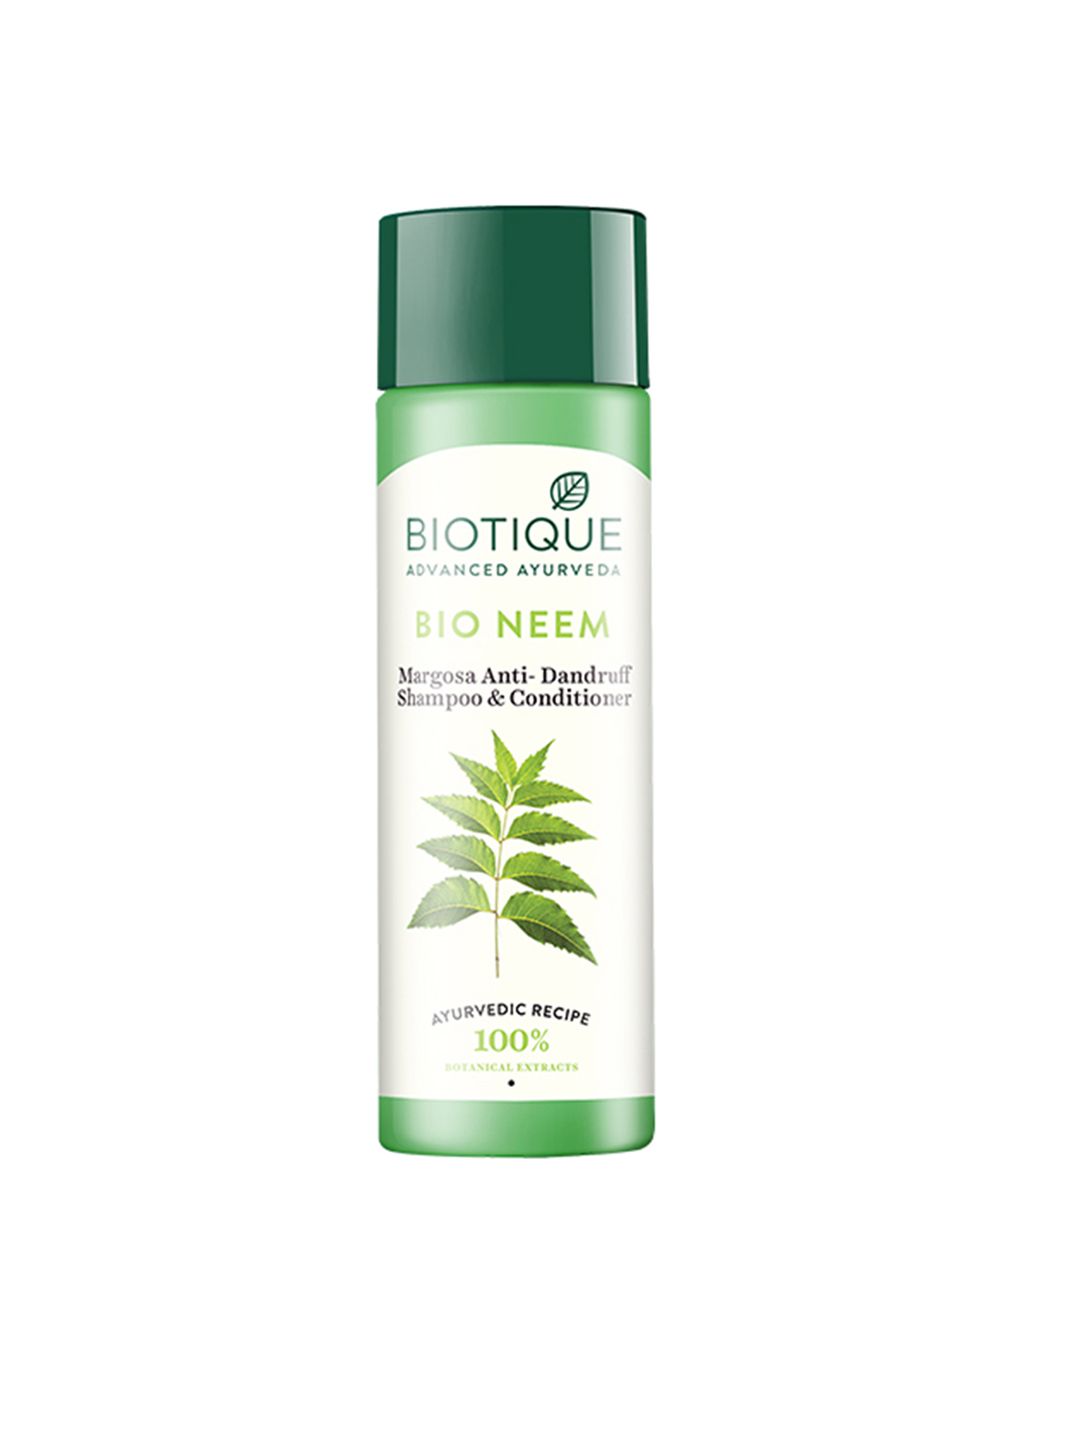 Biotique Bio Neem Margosa Anti-Dandruff Shampoo & Conditioner 190 ml Price in India